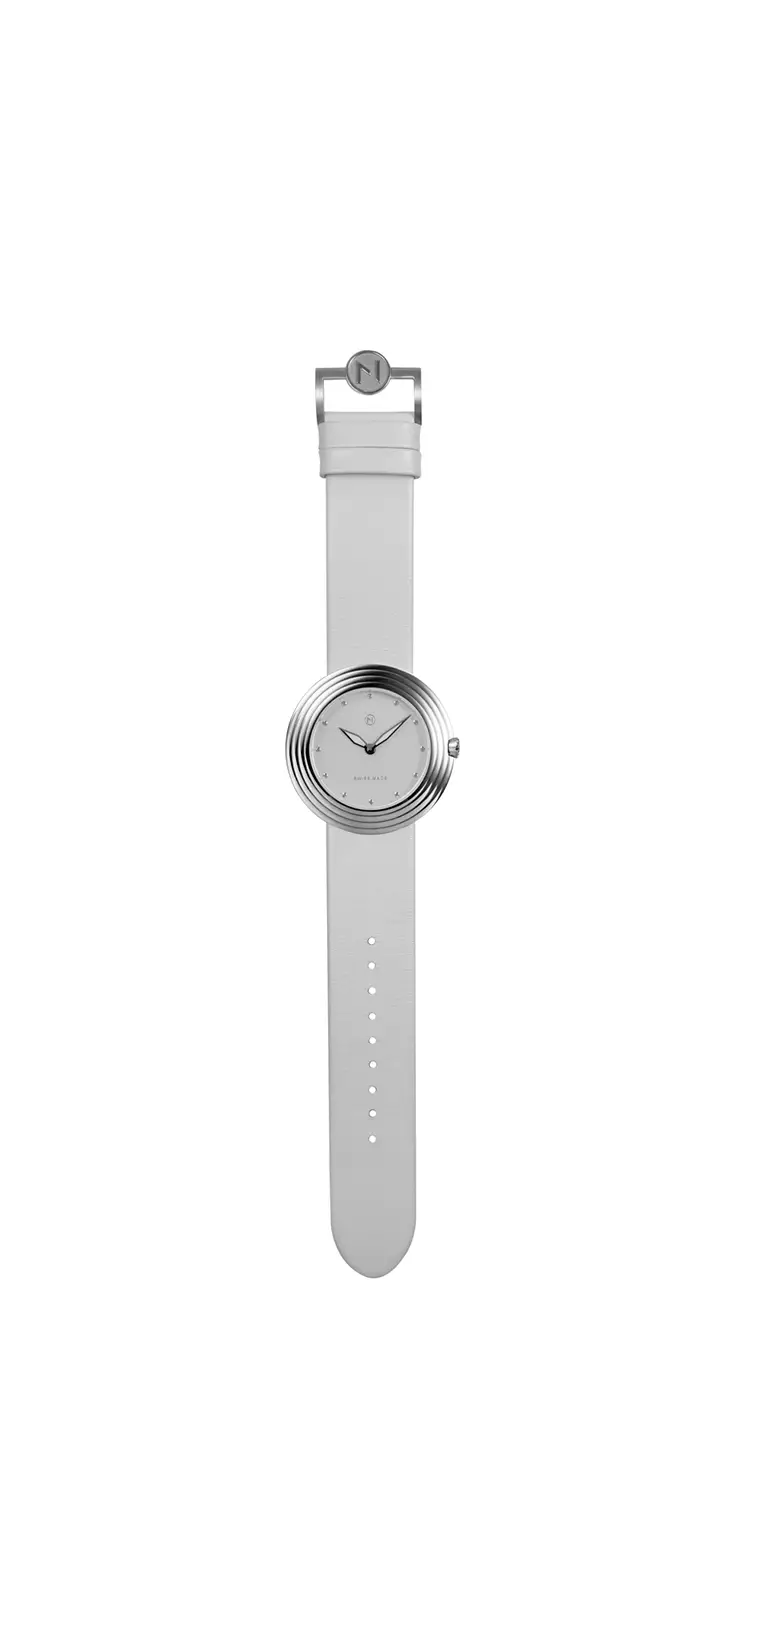 NOVE Streamliner Swiss Made Quartz Leather Watch for Women 40mm White Silver B002-01